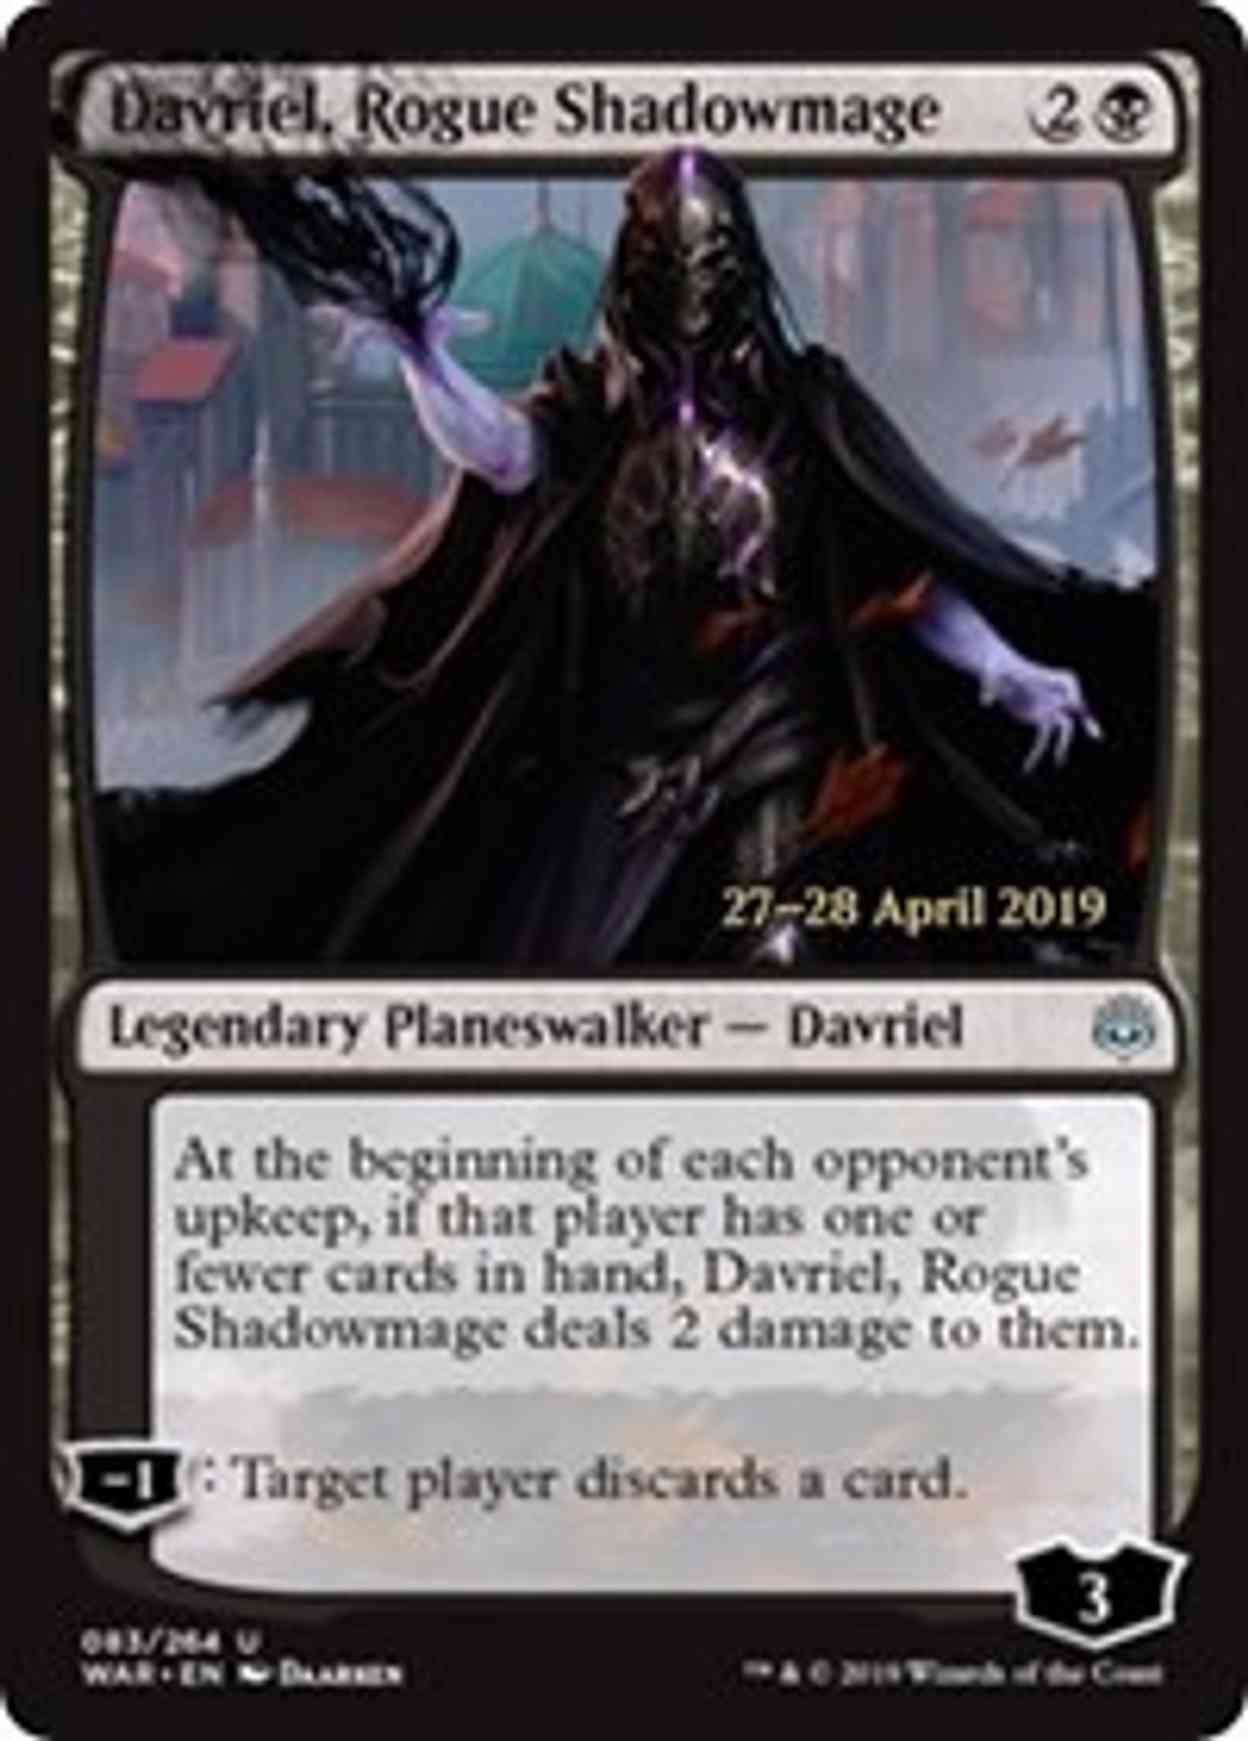 Davriel, Rogue Shadowmage magic card front